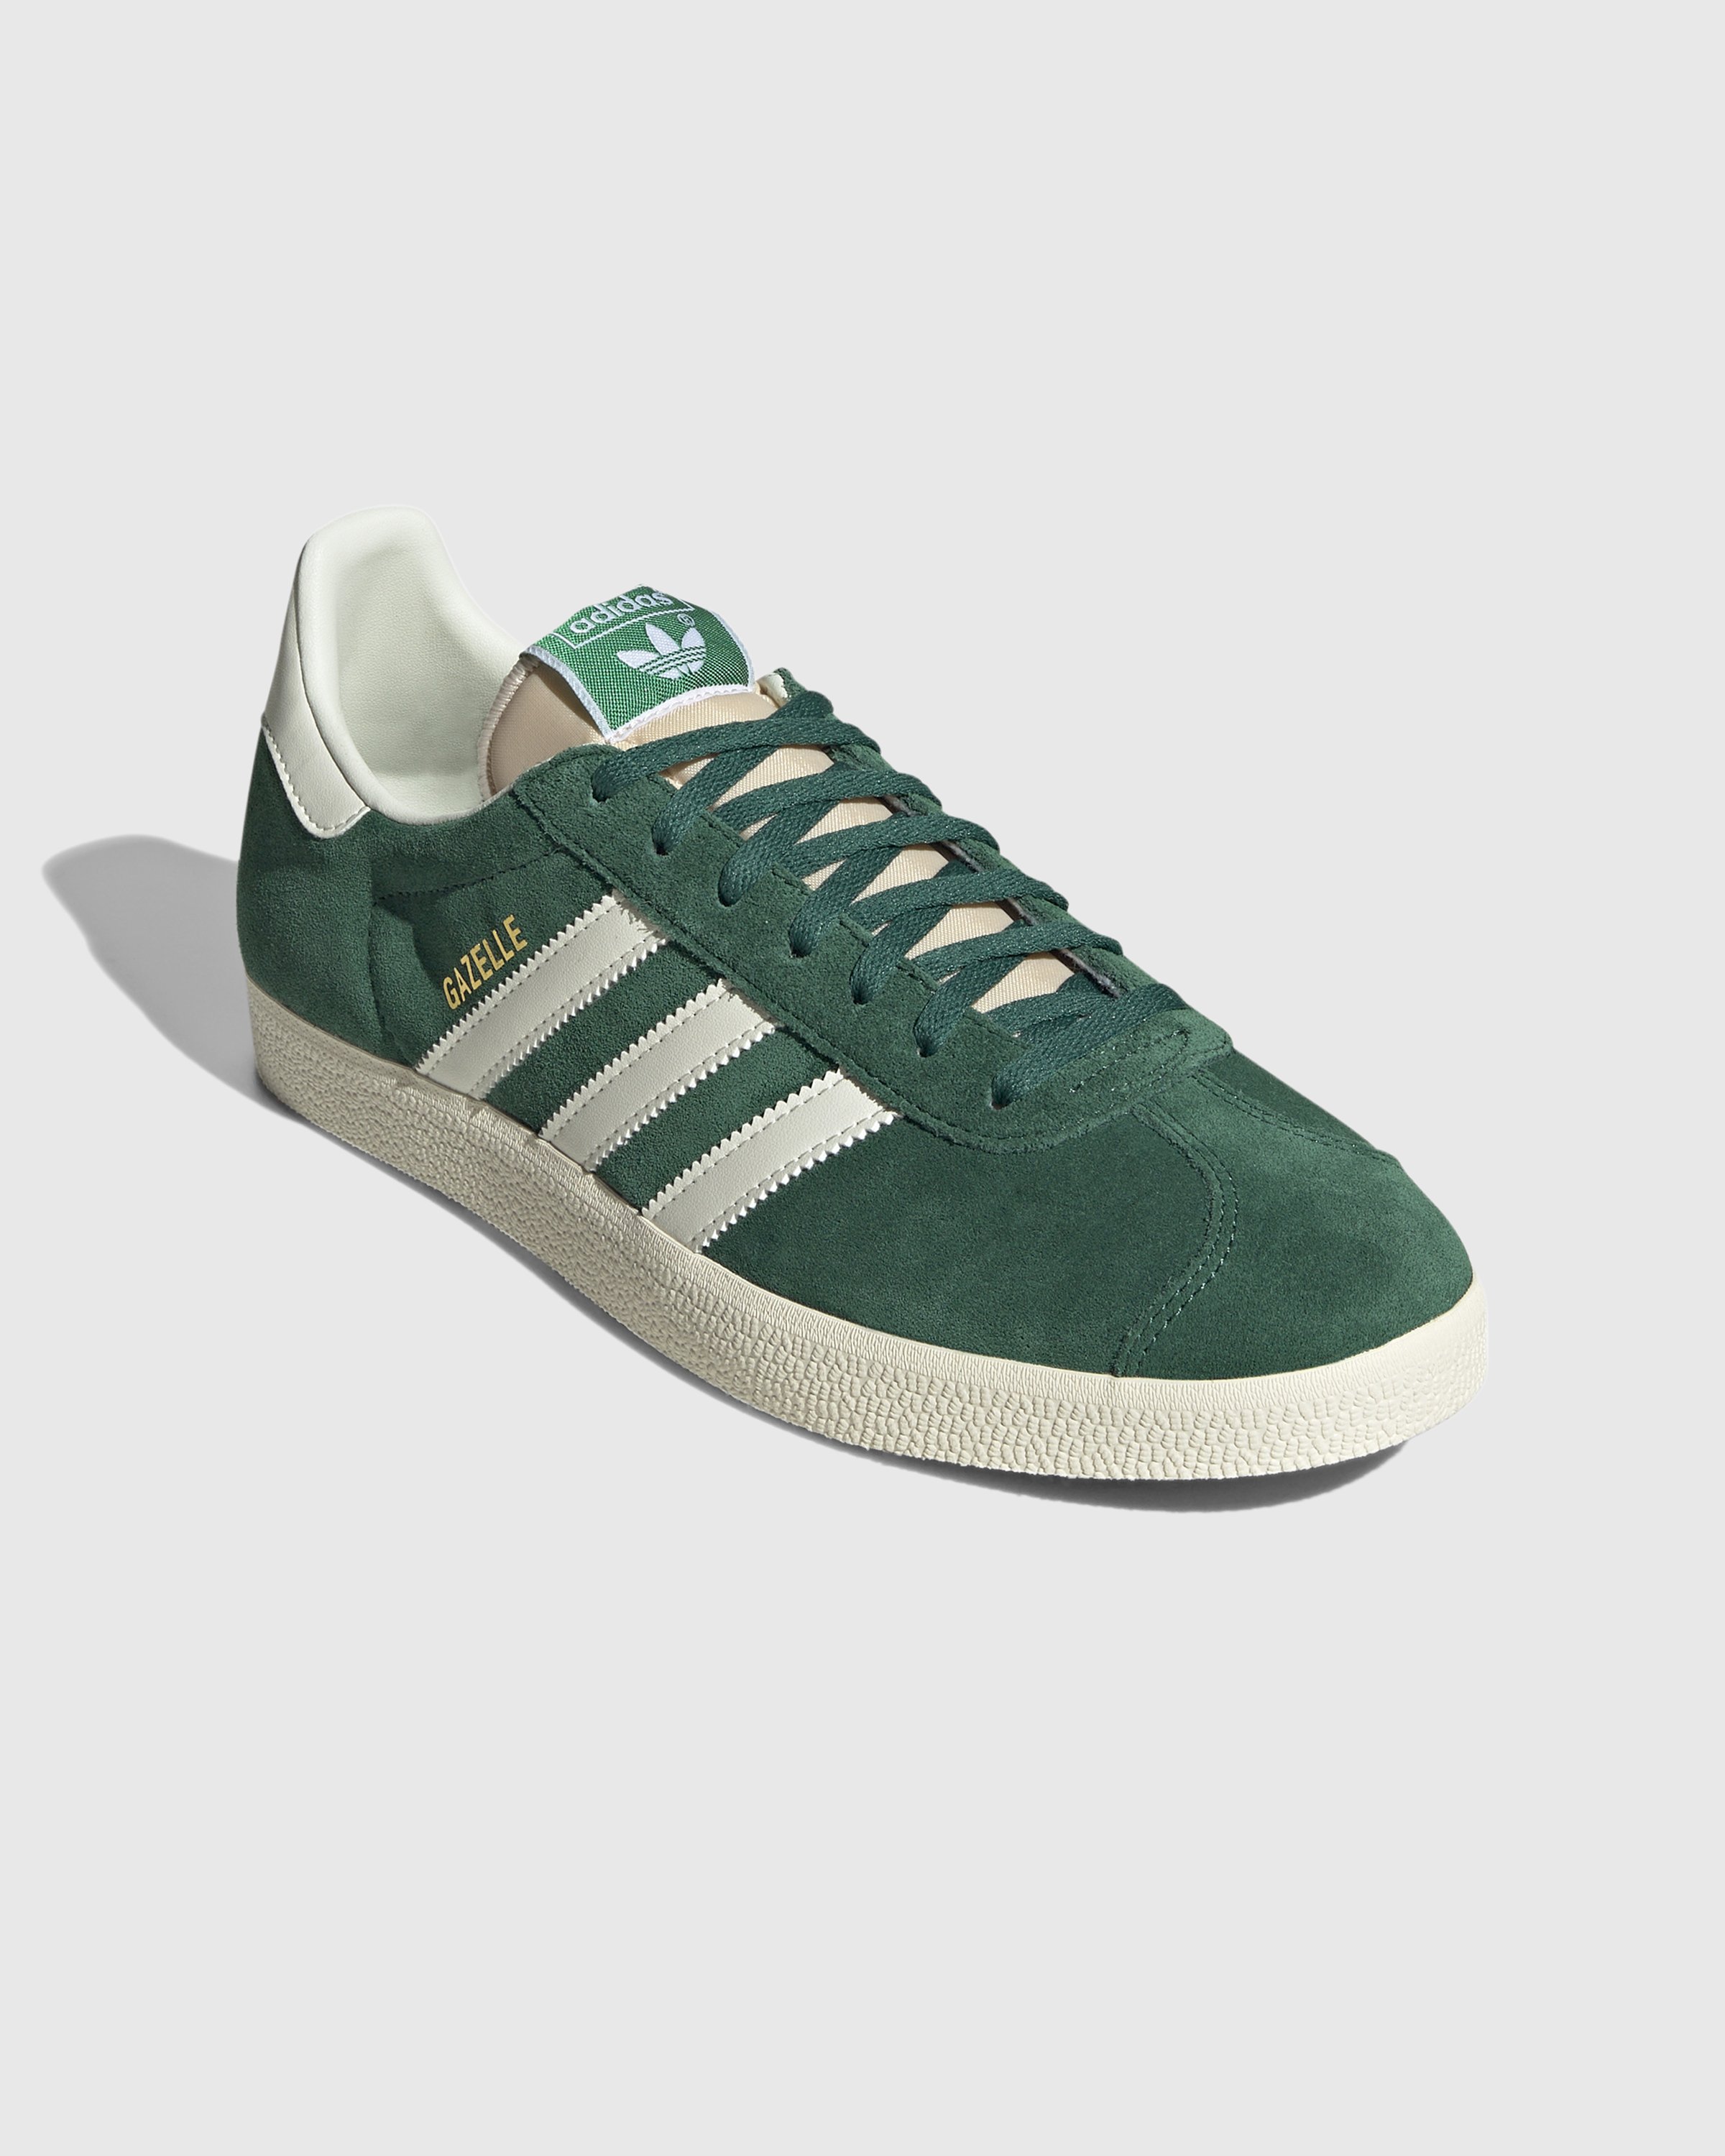 Adidas - Gazelle Green/White - Footwear - Green - Image 3